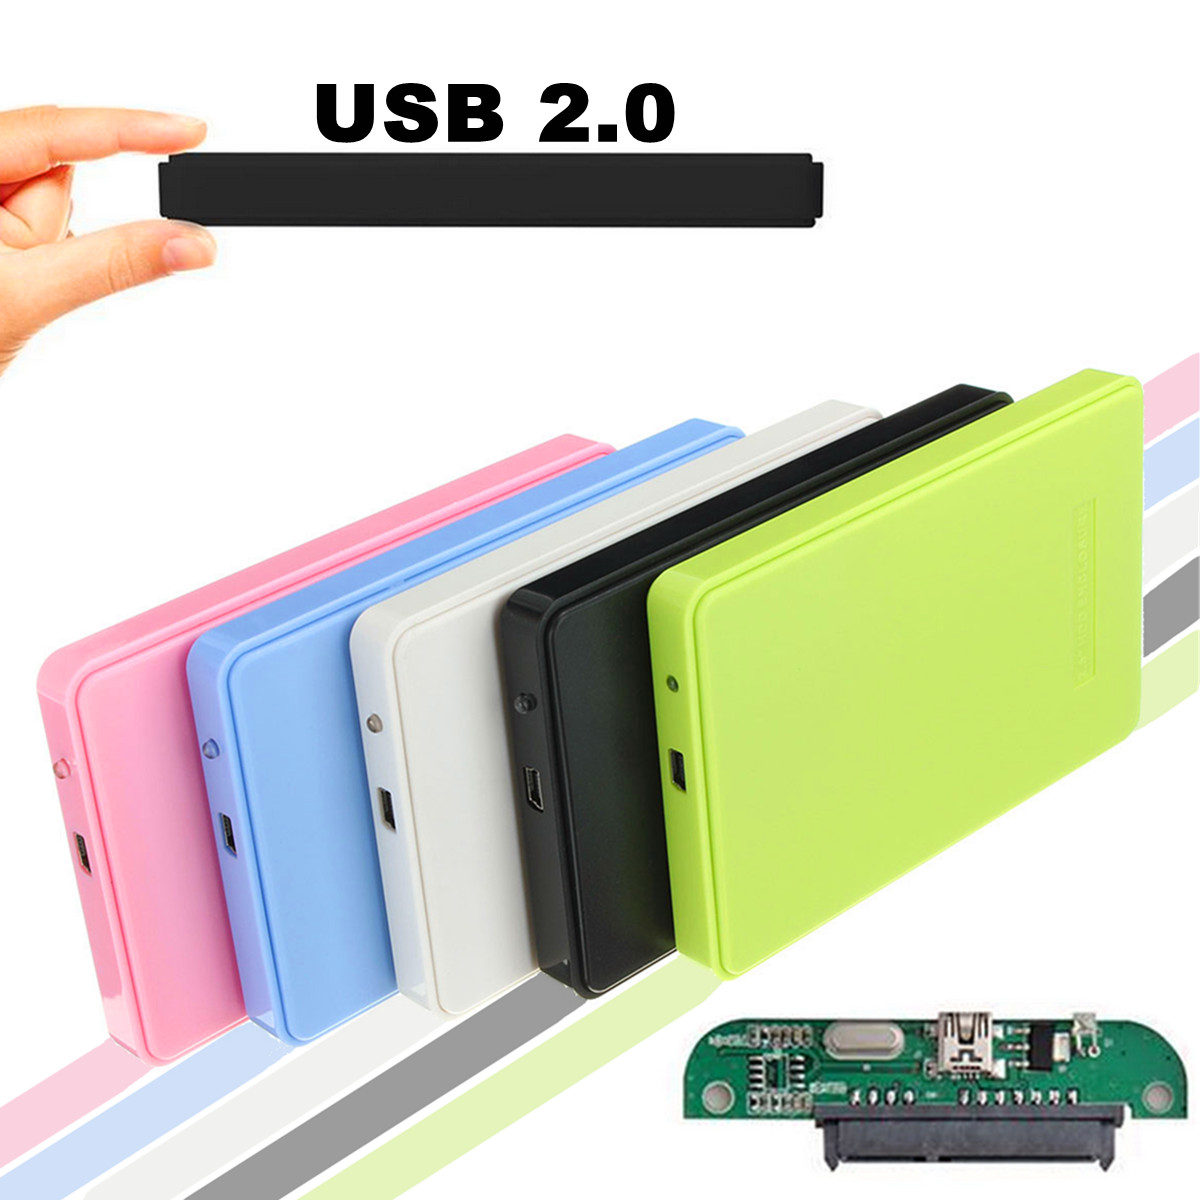       USB 2.0      SATA 2.5   HDD   